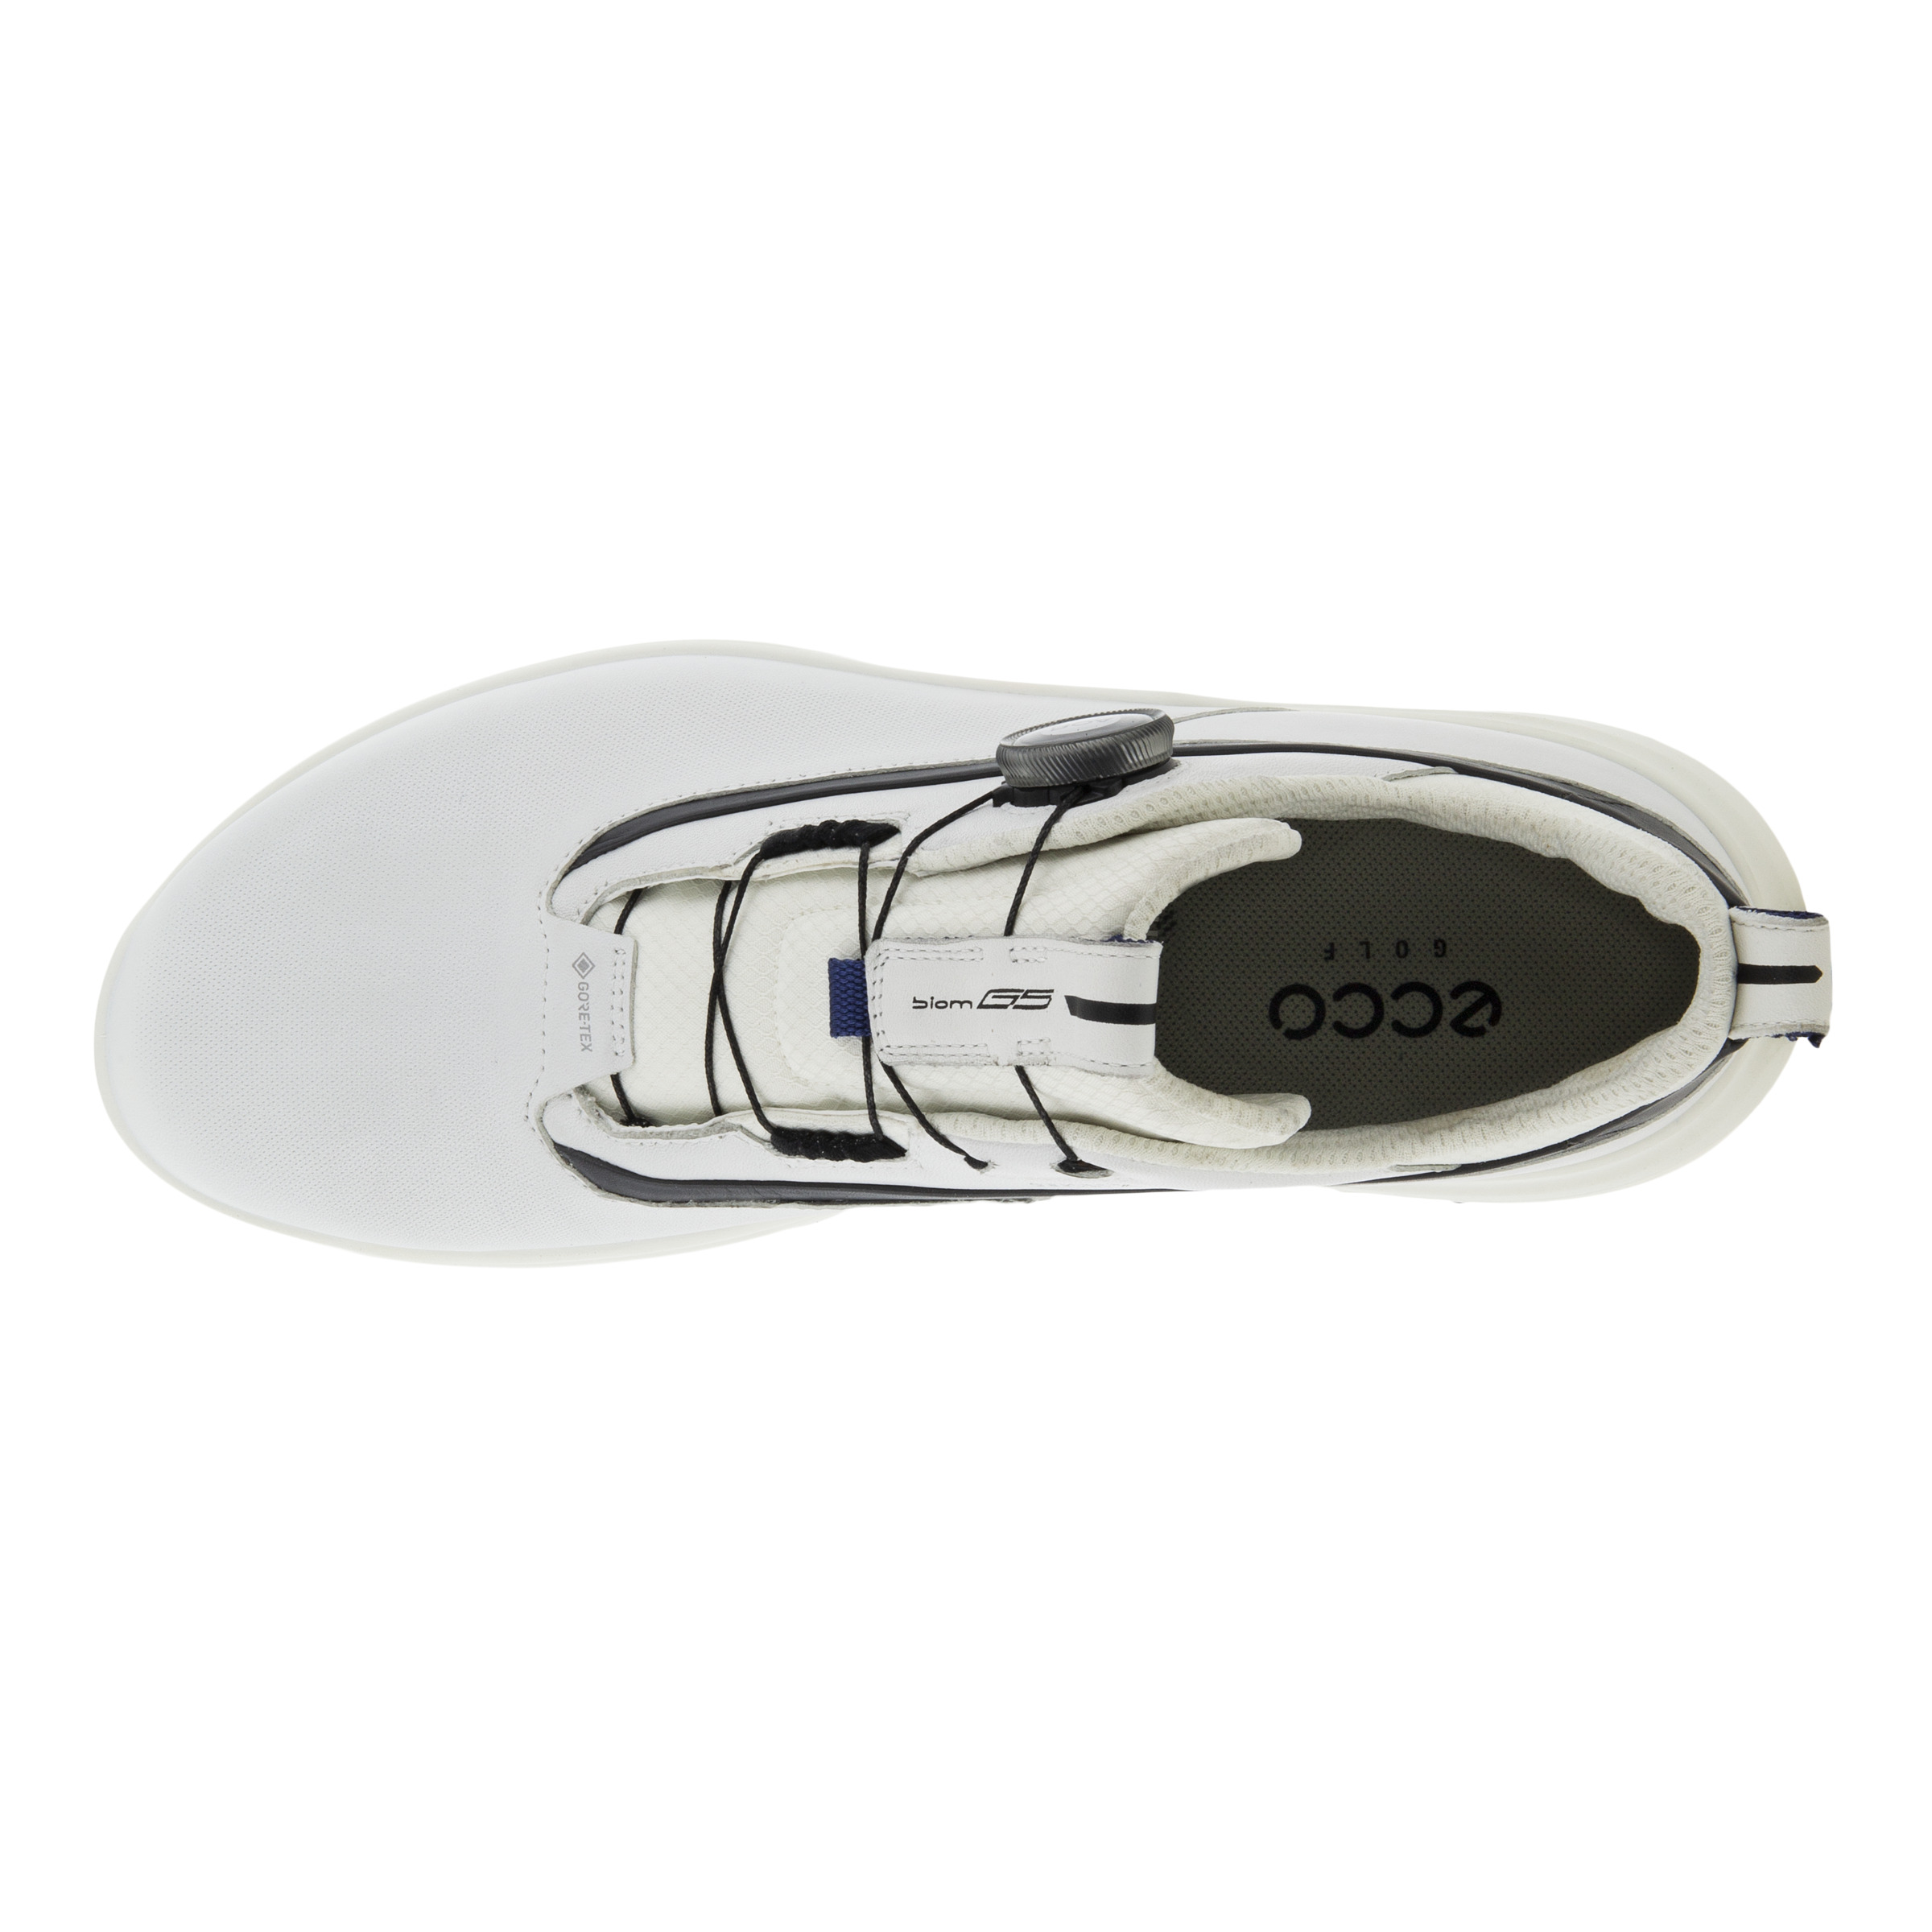 ECCO Biom G5 Golf Shoes White/Black | Scottsdale Golf